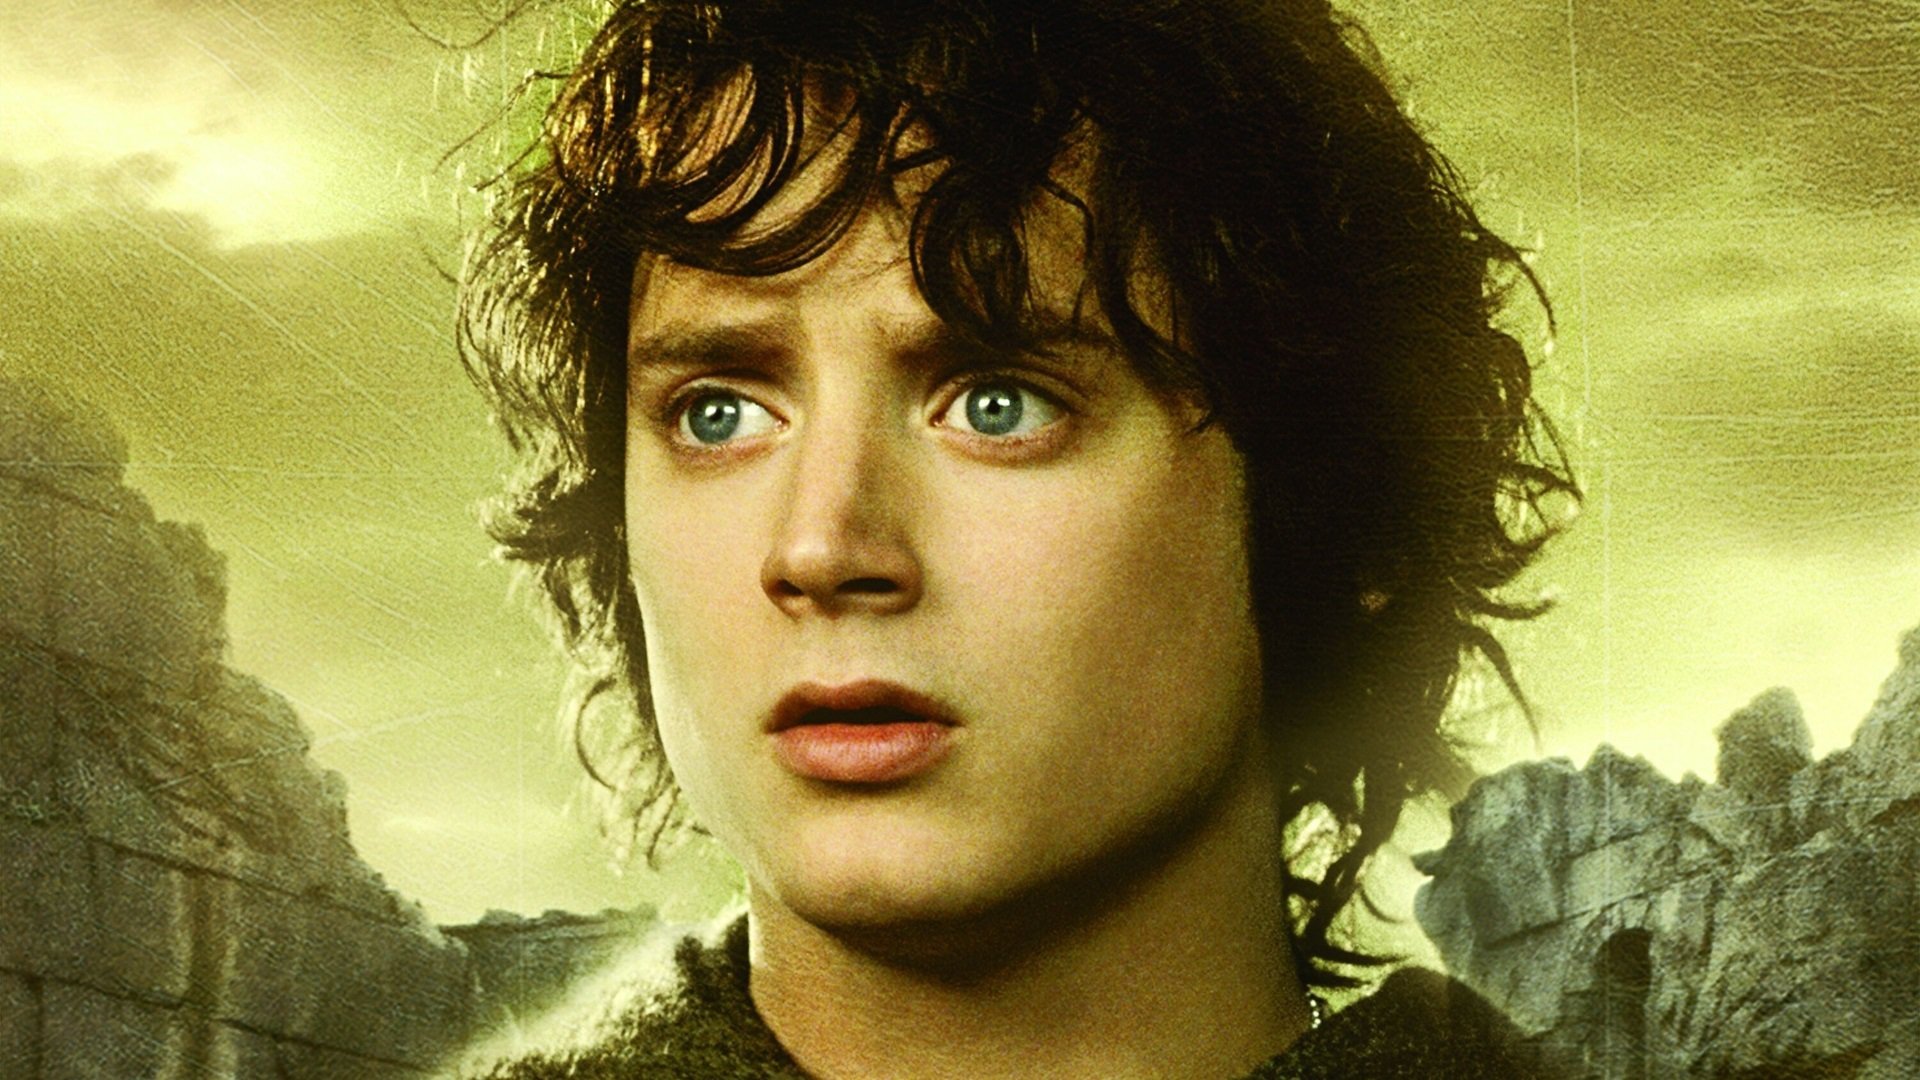 Властелин колец тома. Хоббит Фродо. Властелин колец Фродо. Фродо Бэггинс Властелин колец. Властелин колец братство кольца Фродо.